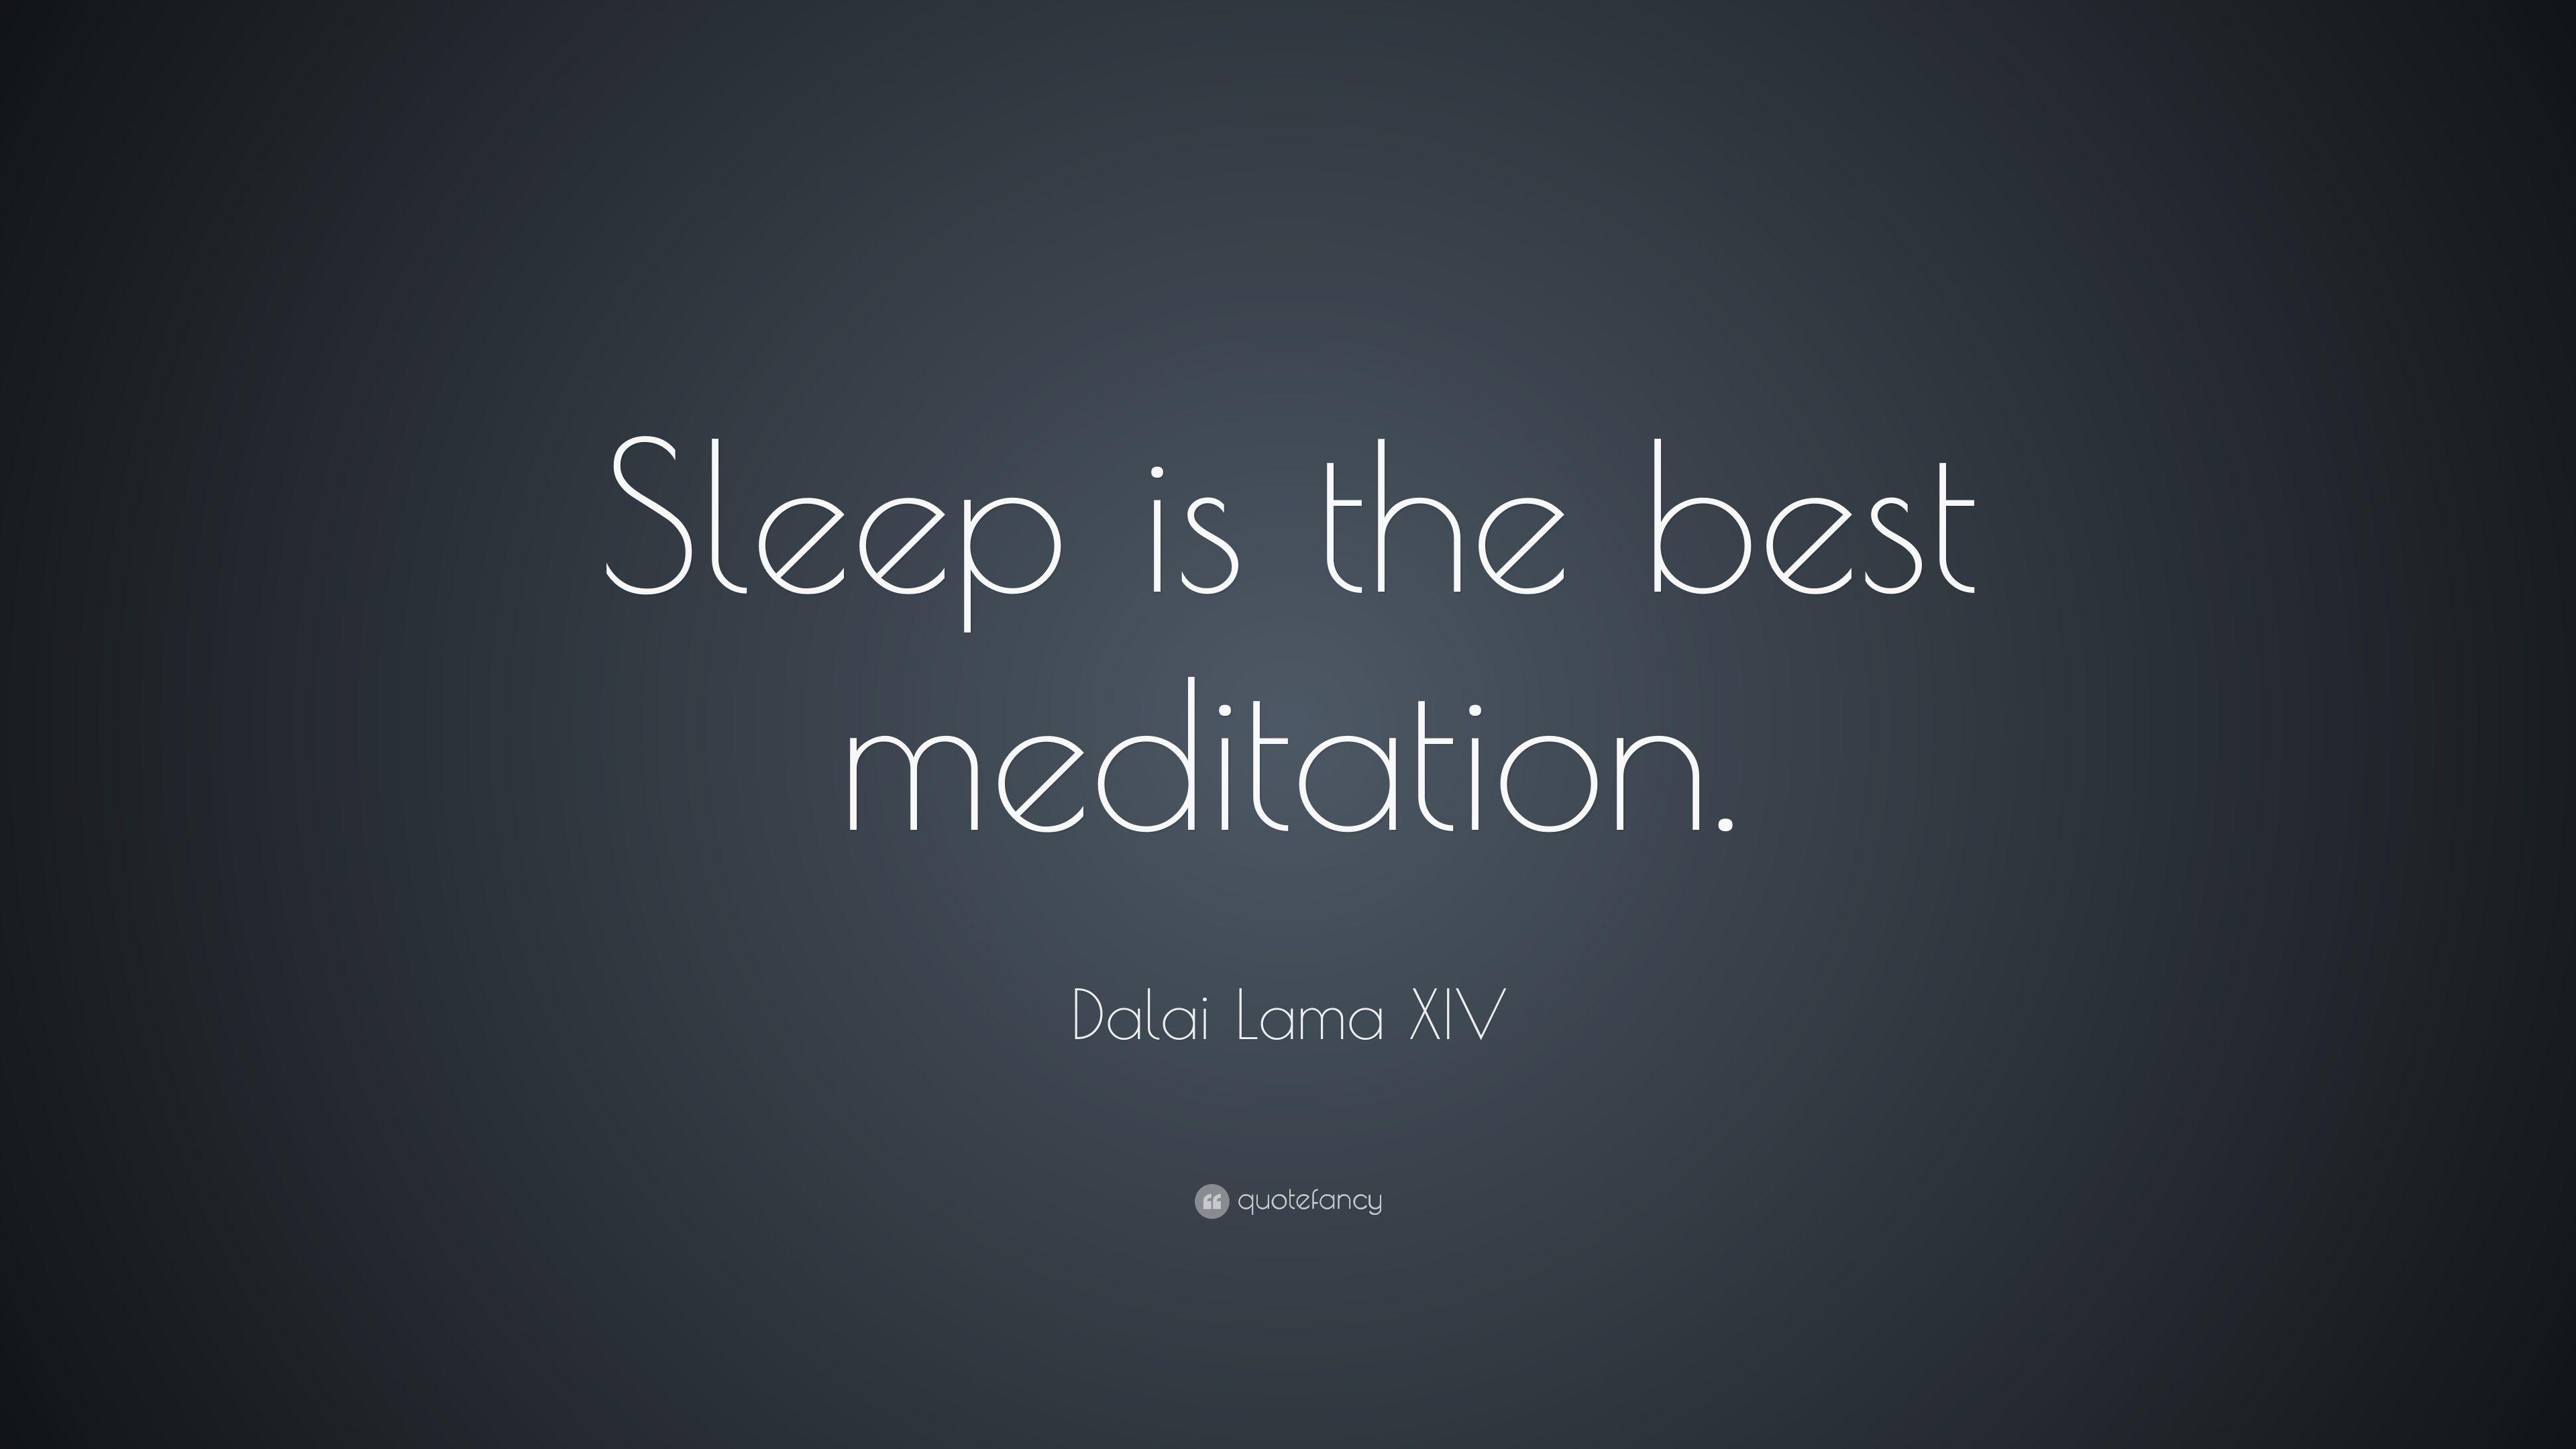 Dalai Lama XIV Quote: “Sleep is the best meditation.” 19